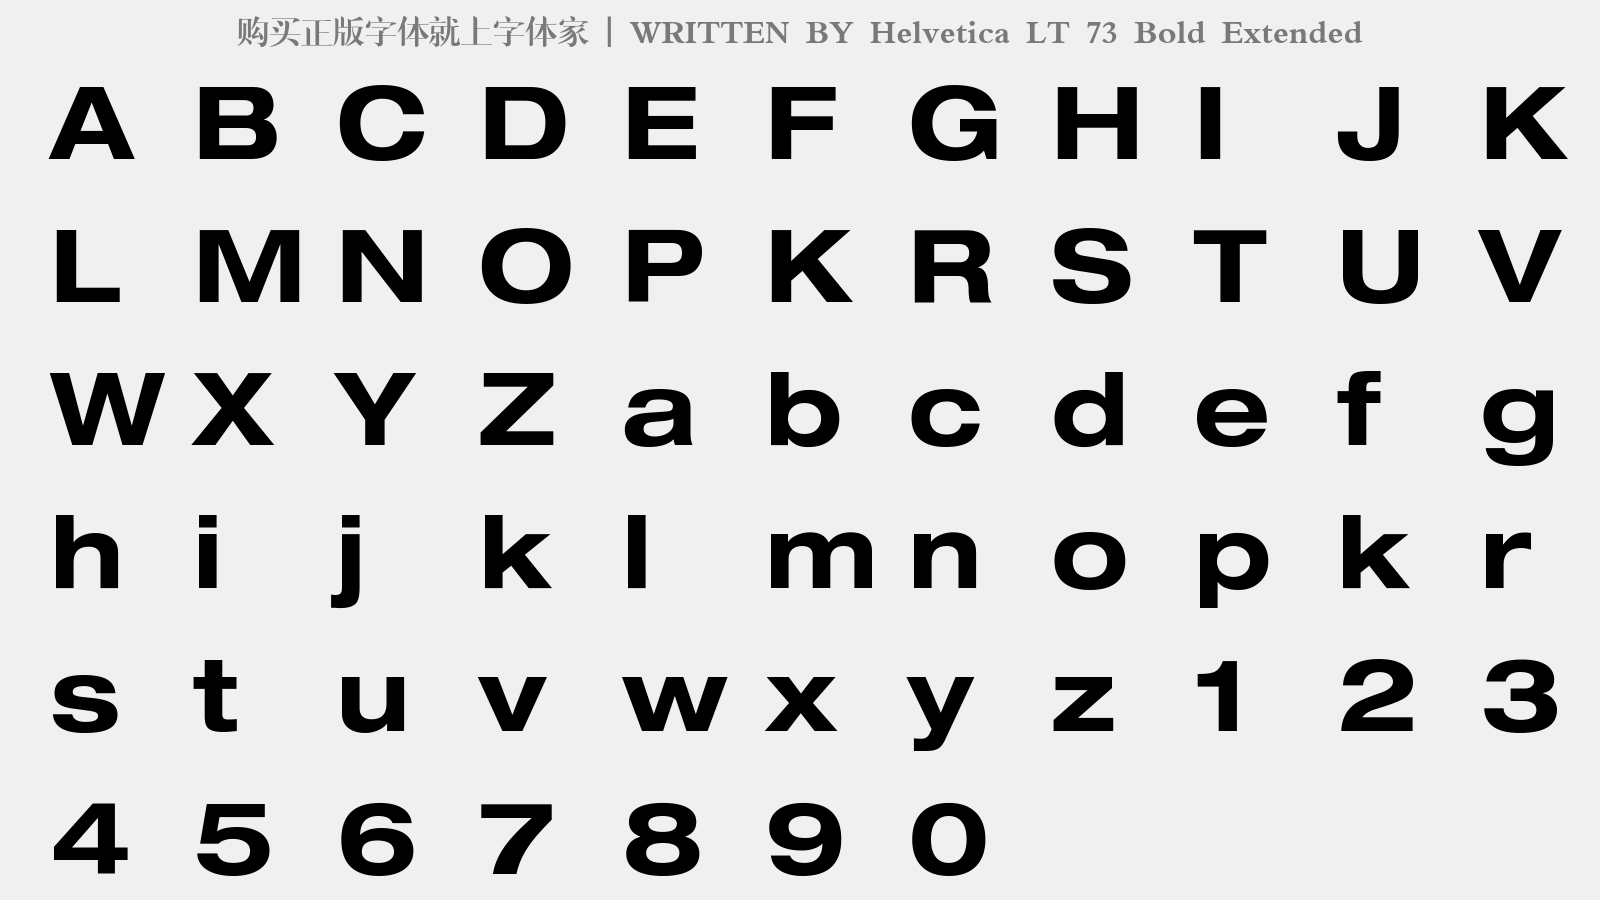 Helvetica Neue LT Std 73 Bold Extended